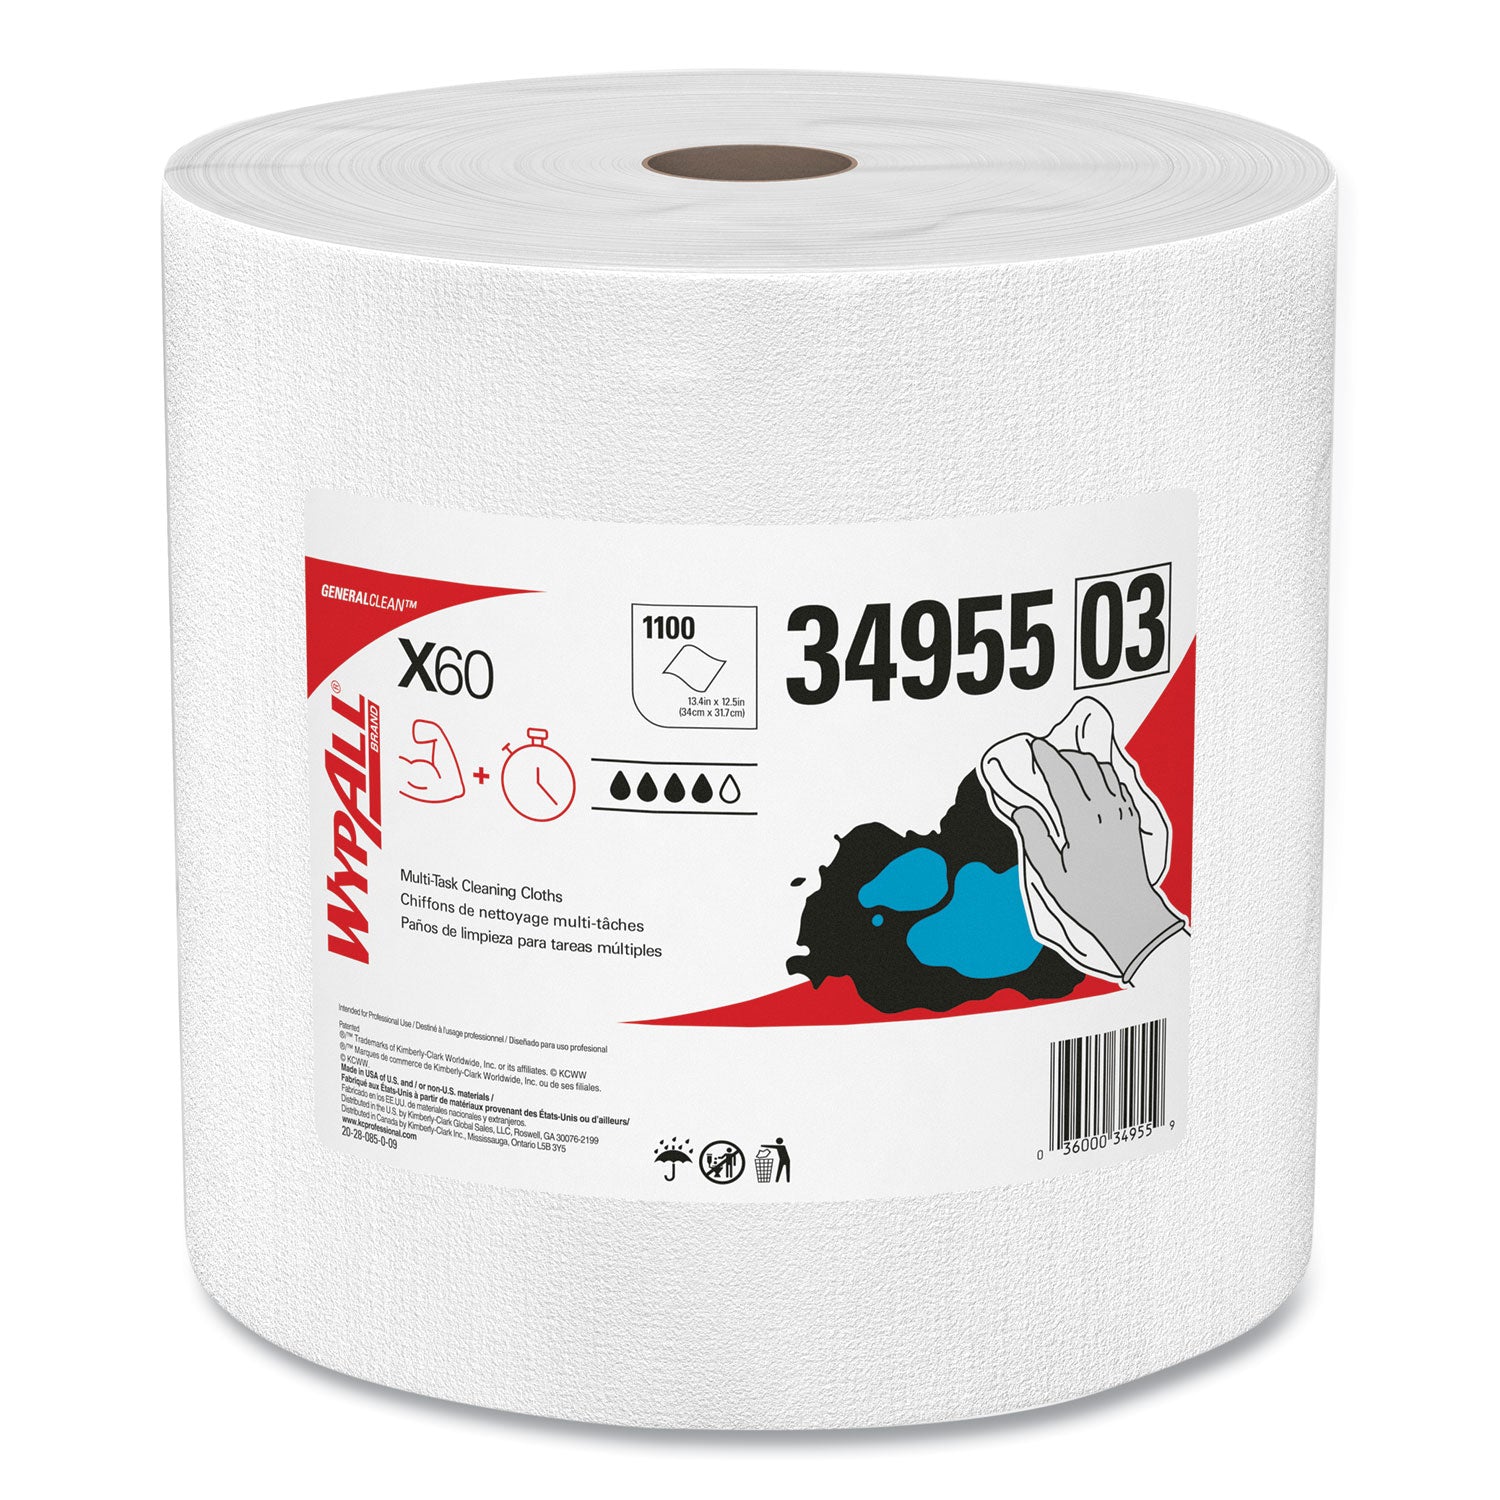 General Clean X60 Cloths, Jumbo Roll, 12.2 x 12.4, White, 1,100/Roll - 